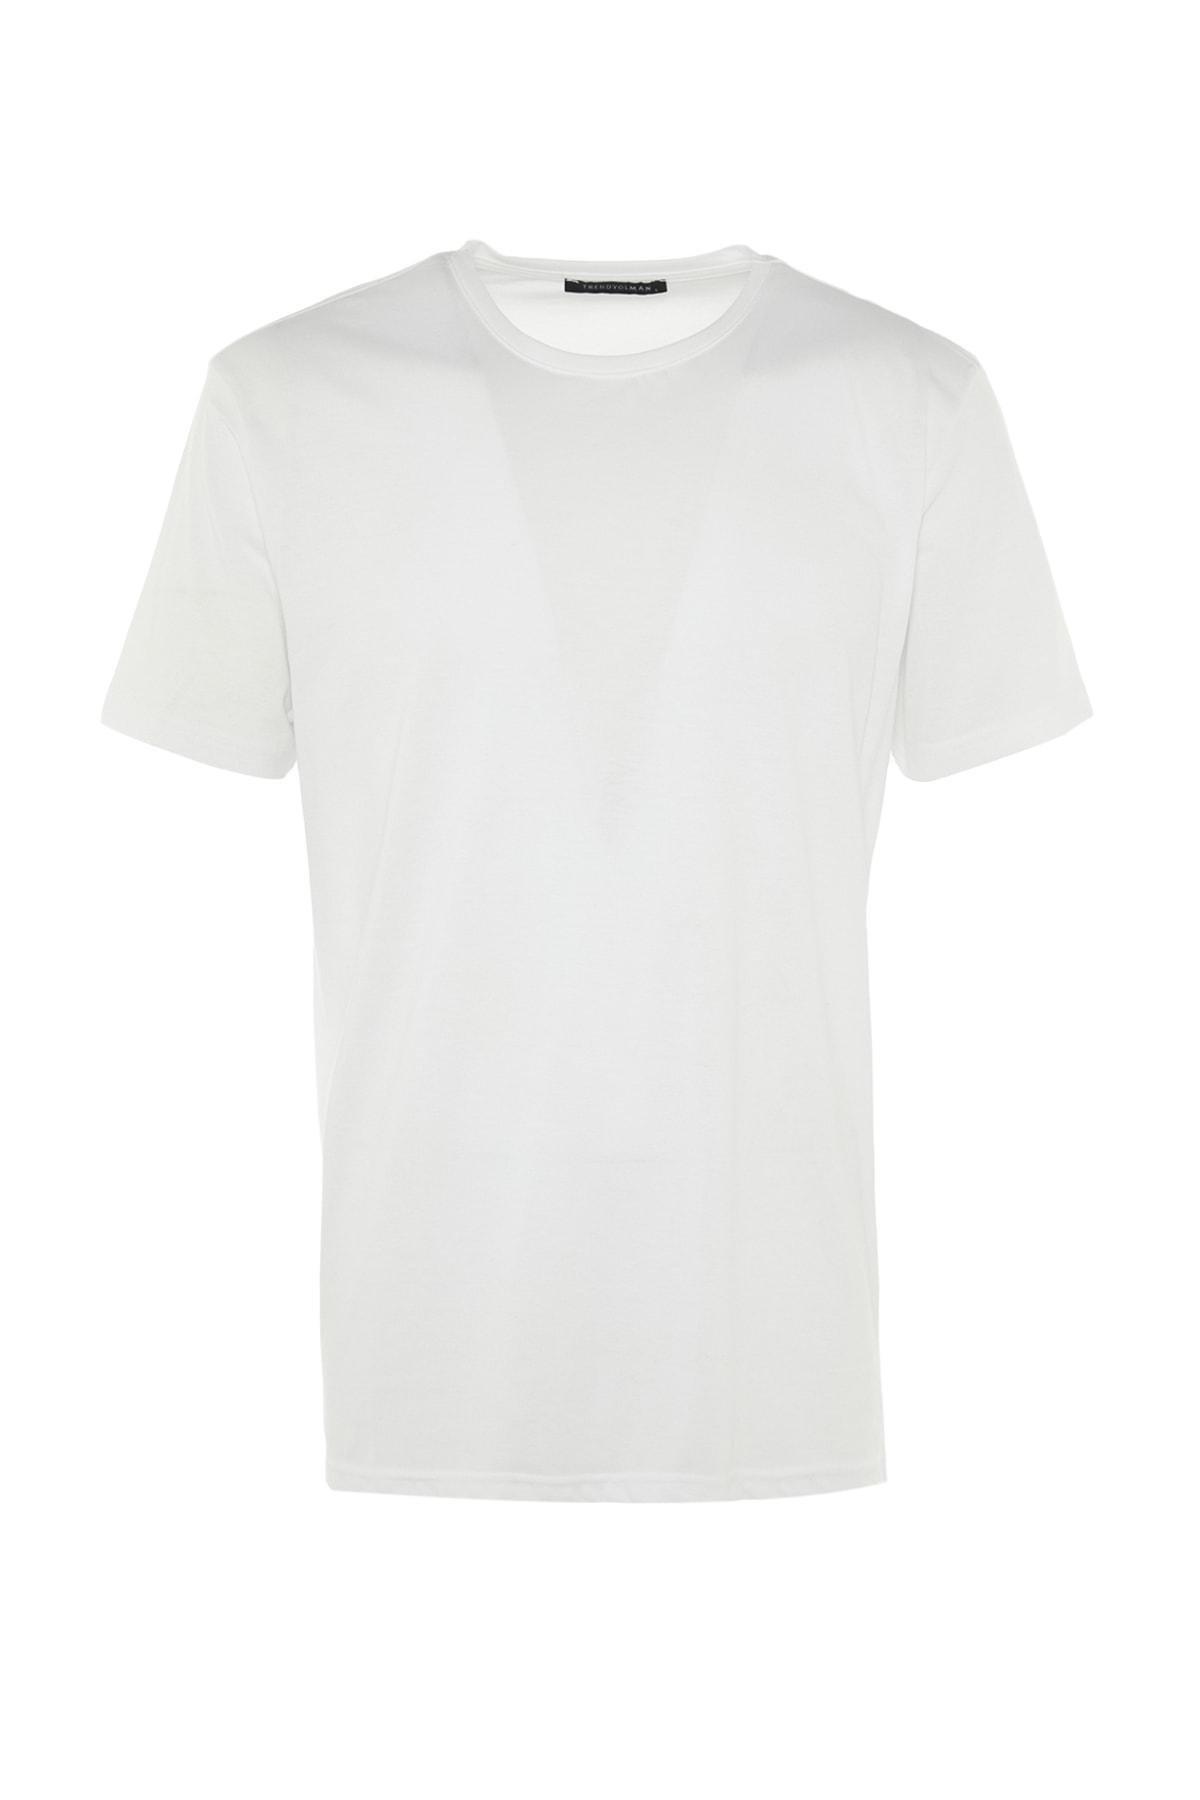 Trendyol - White Crew Neck T-Shirt